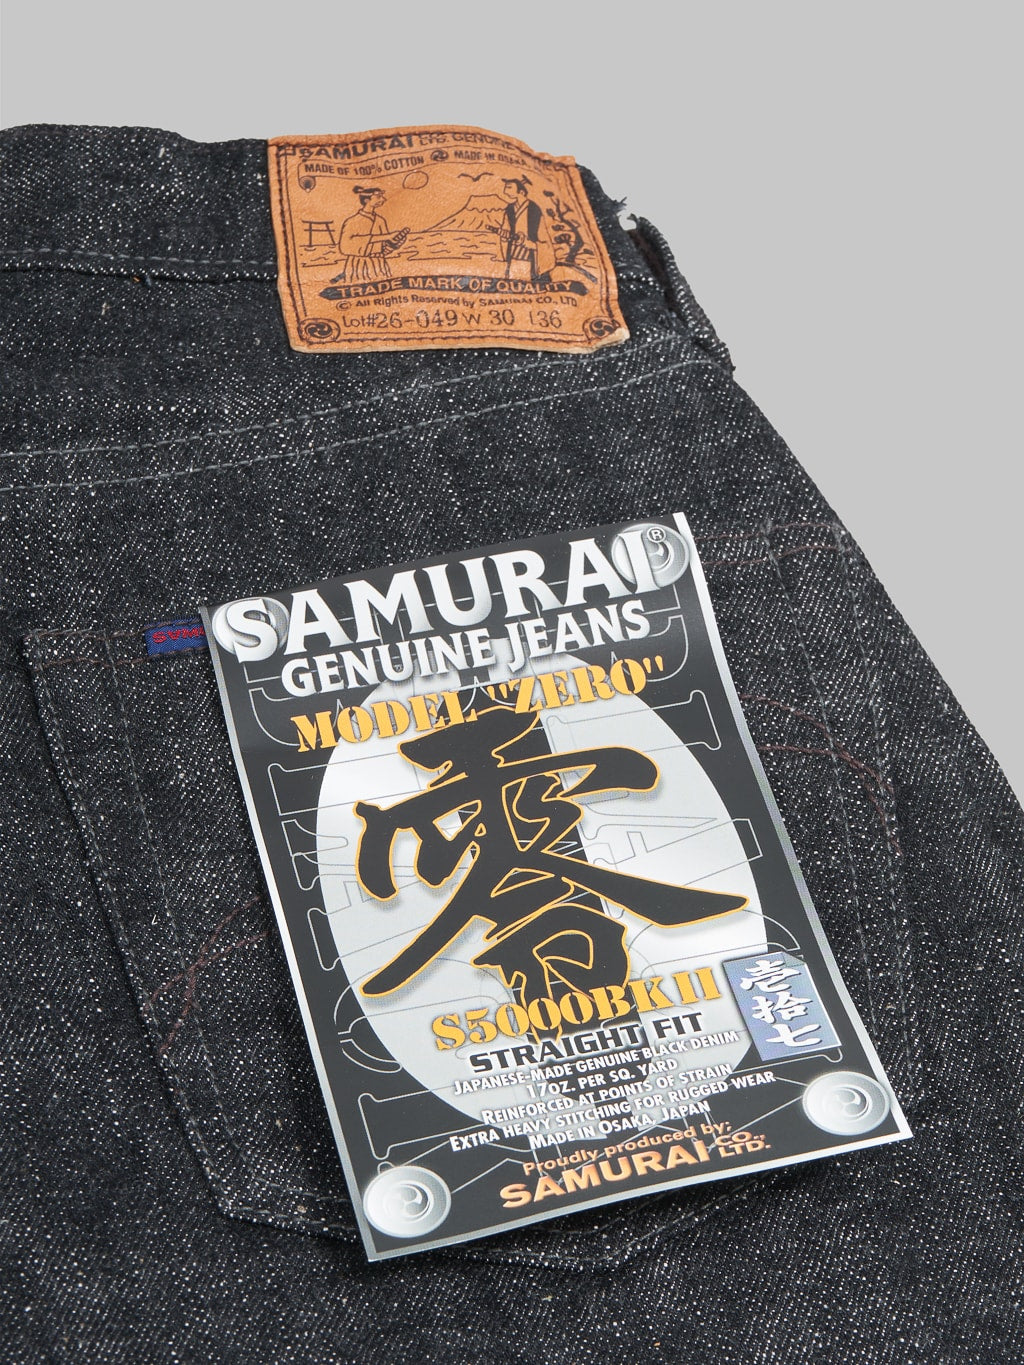 Samurai Jeans S5000BKII "Zero-Black" Slubby Black 17oz Regular Straight Jeans